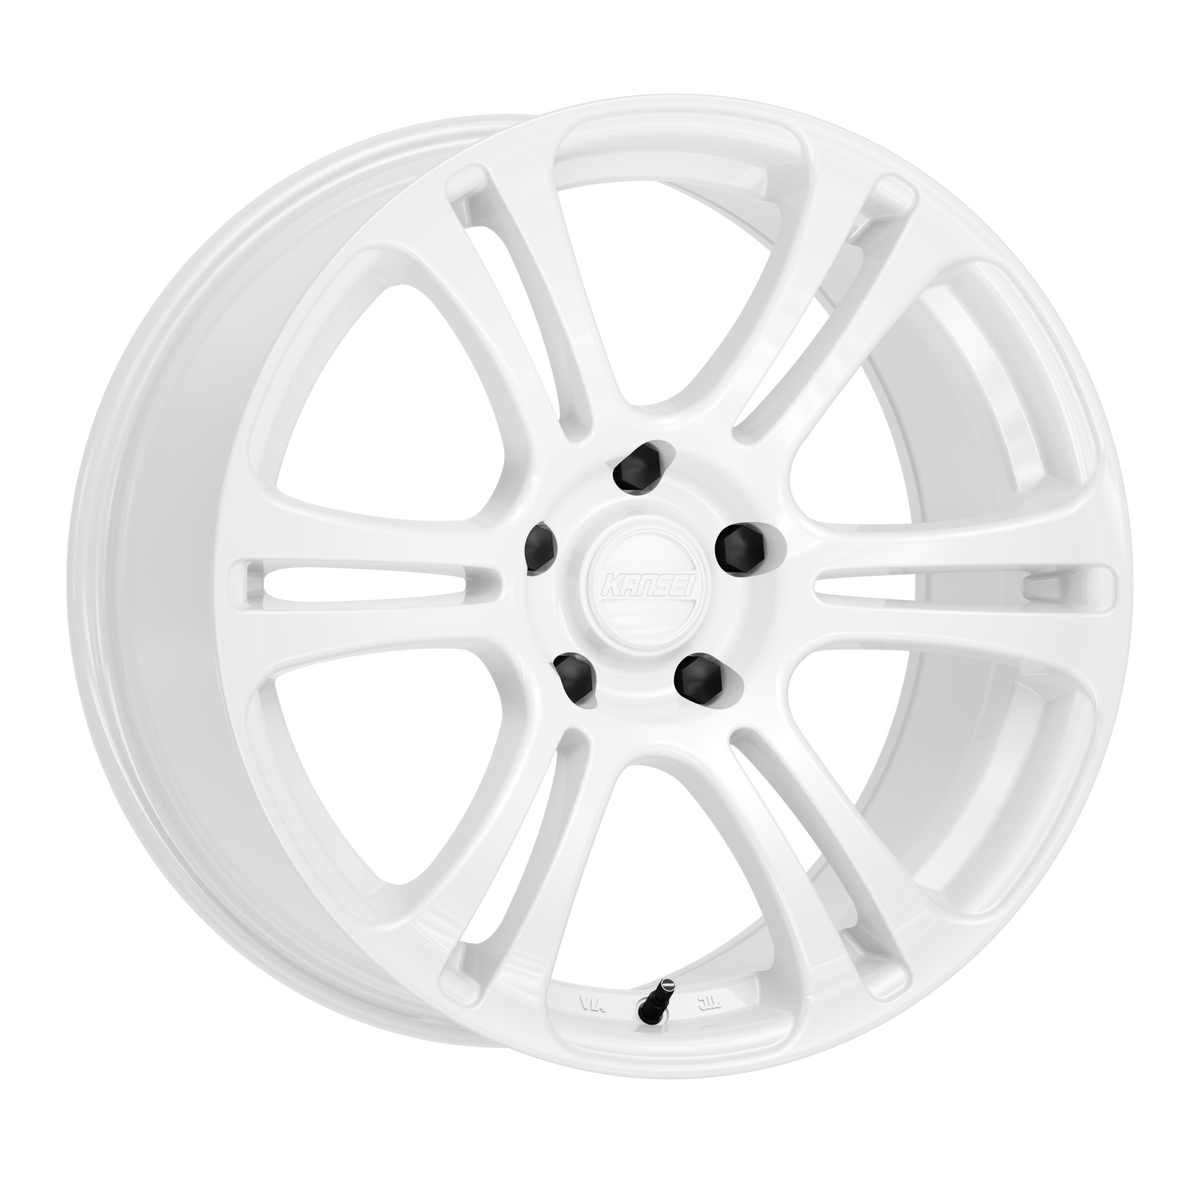 K16W NEO Wheel, Size: 18" x 10.50", Bolt Pattern: 5 x 114.300 mm, Backspace: 6.22" [Finish: Gloss White]